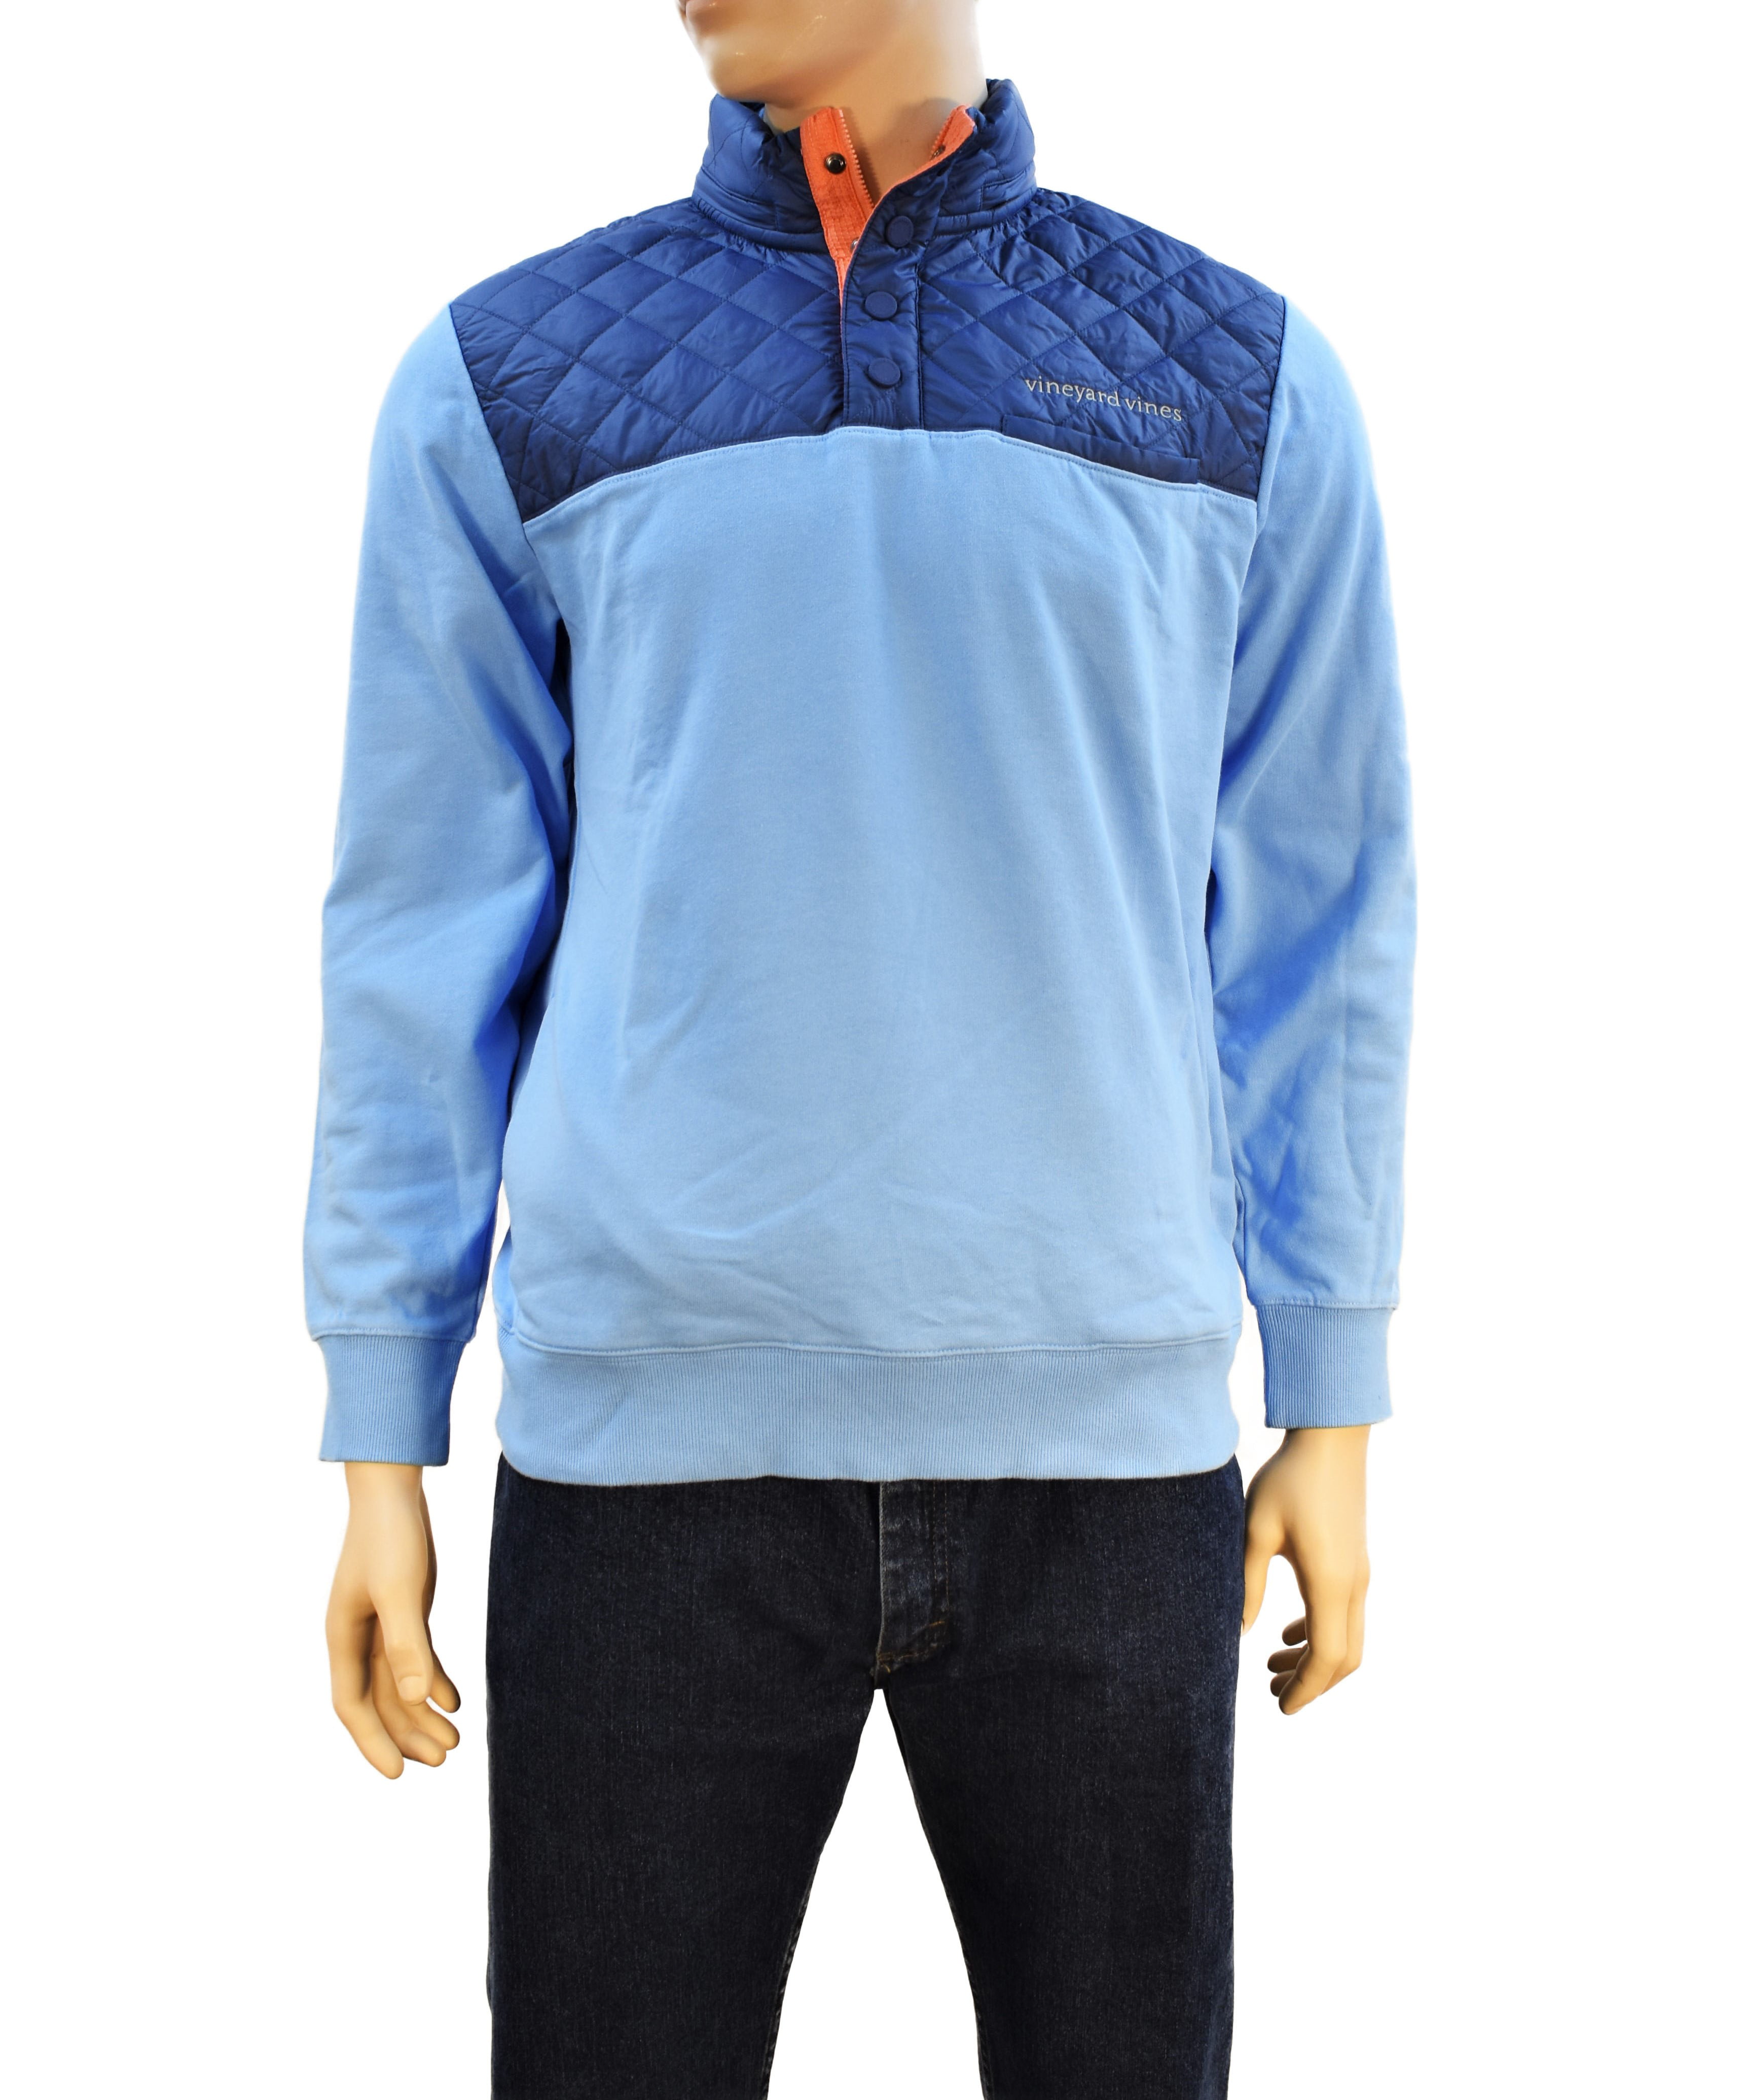 PKAWAY Mens Quick Dry Long Sleeve Camo Compression Runing Shirt Blue 